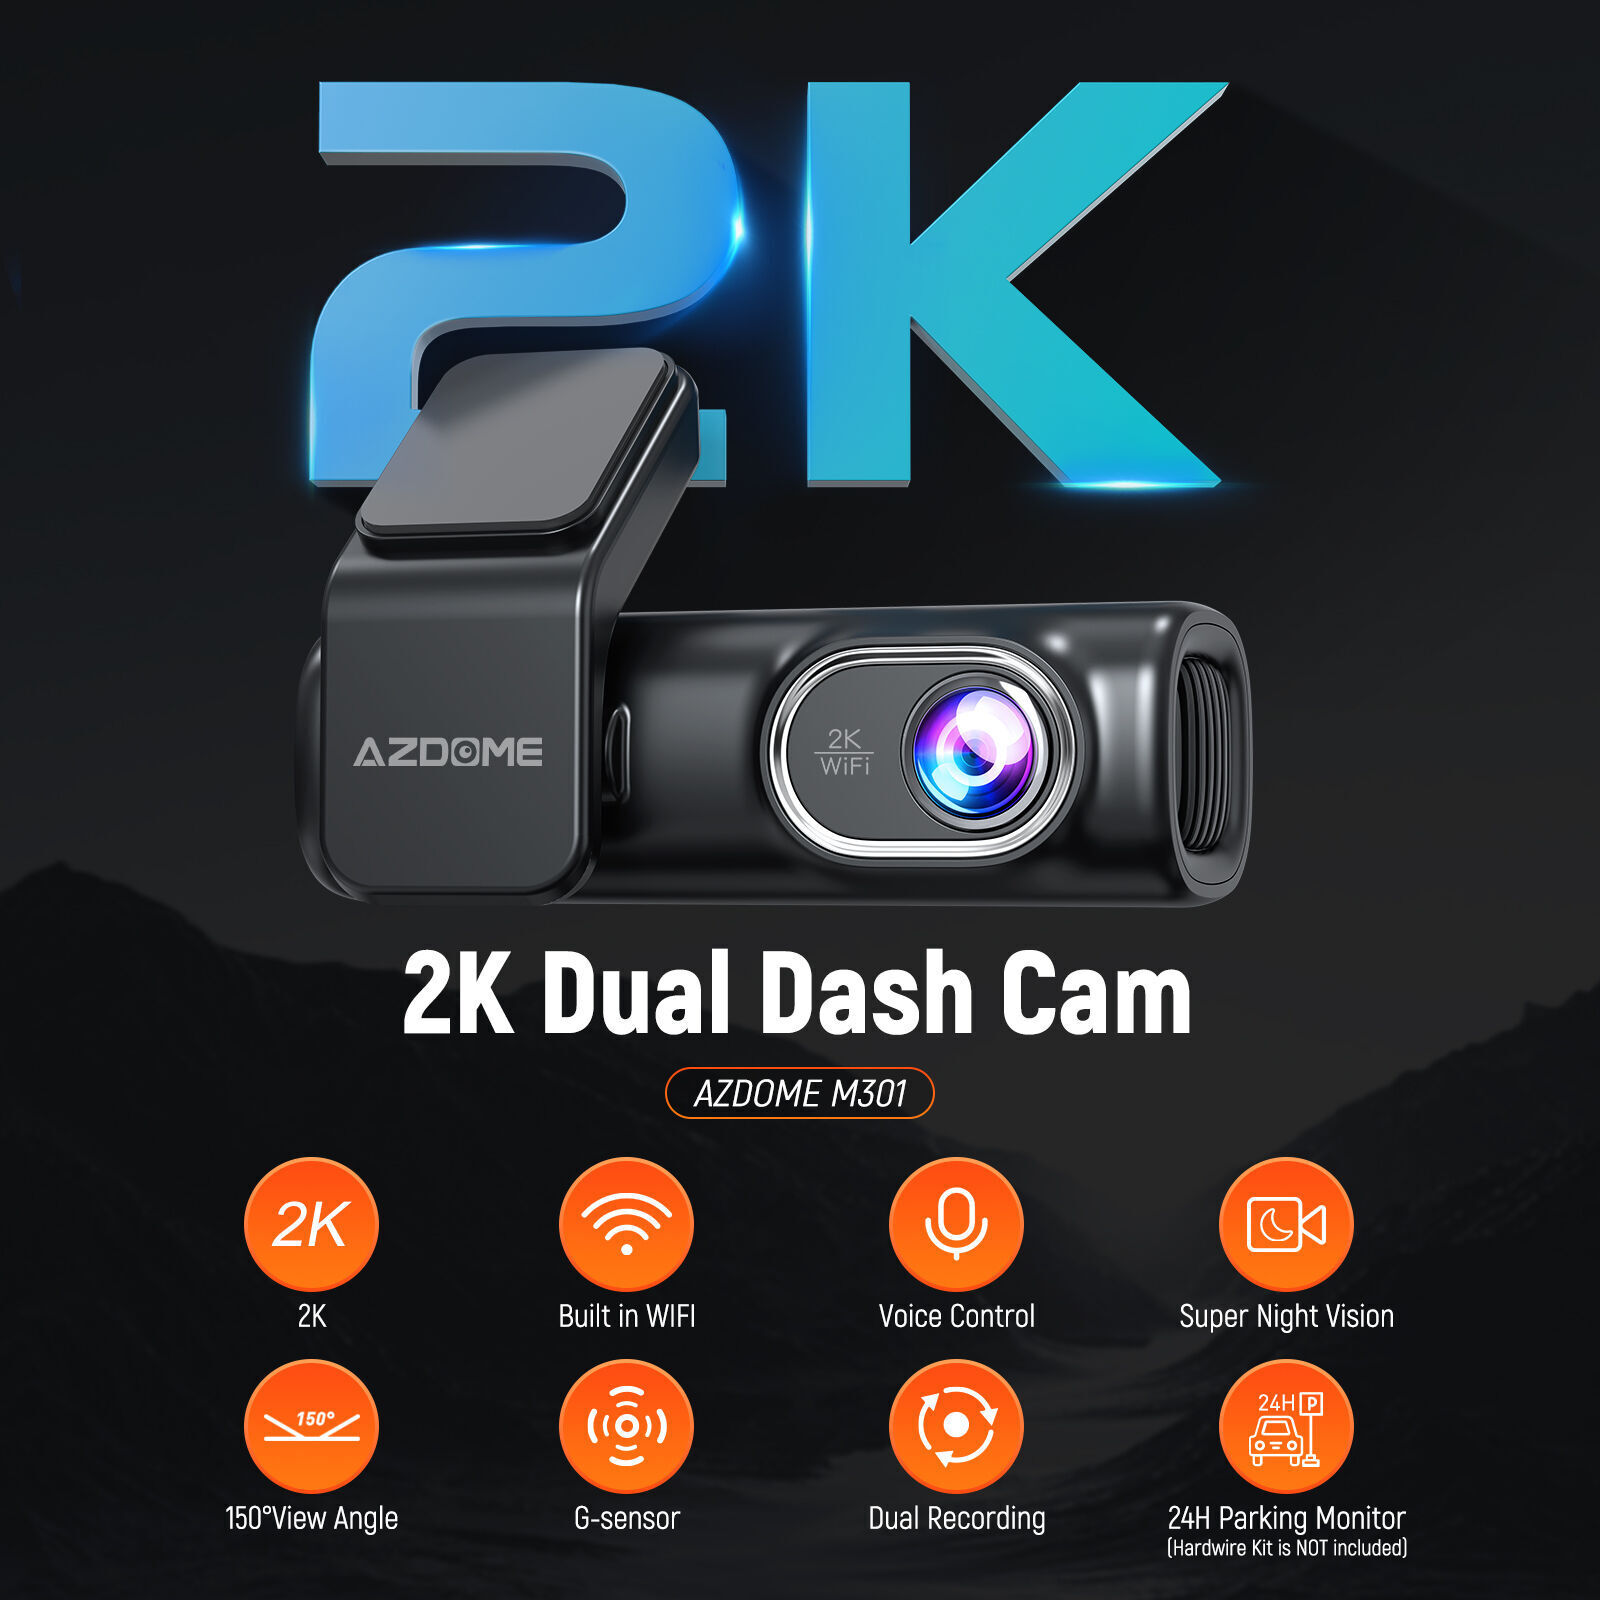 AZDOME 5G WiFi 3 Channel Dash Cam, Dash Camera Front and Rear 4K+1K Free